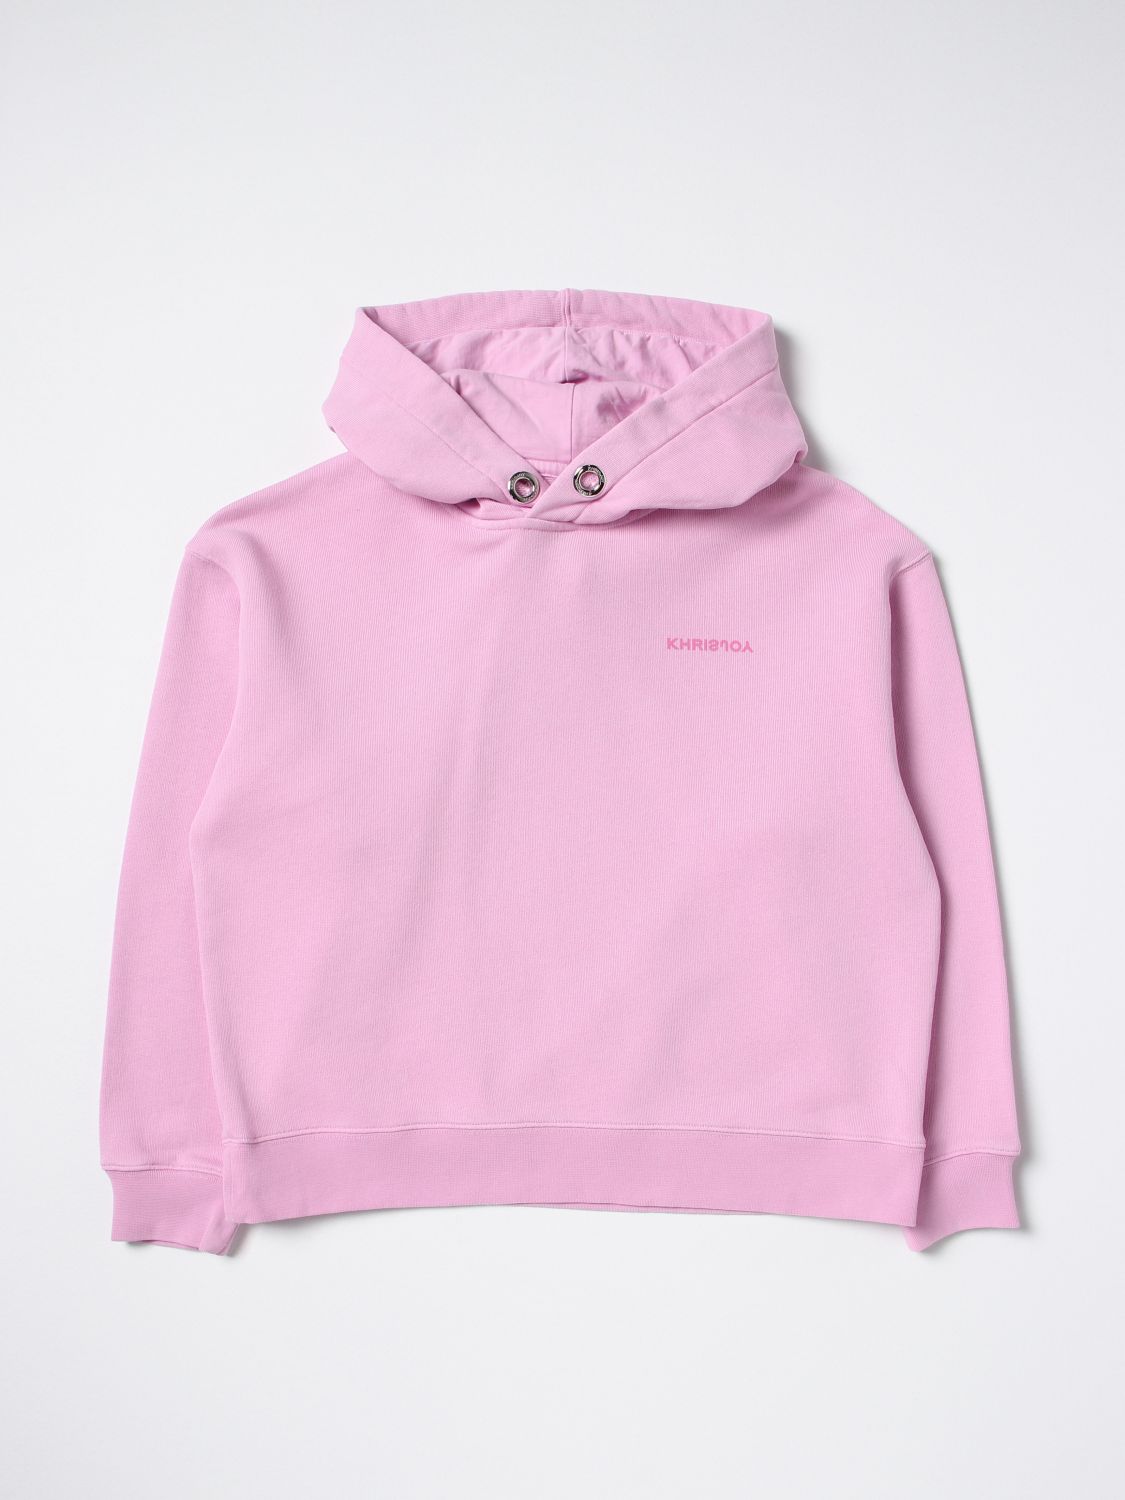 Khrisjoy Sweater  Kids Color Pink